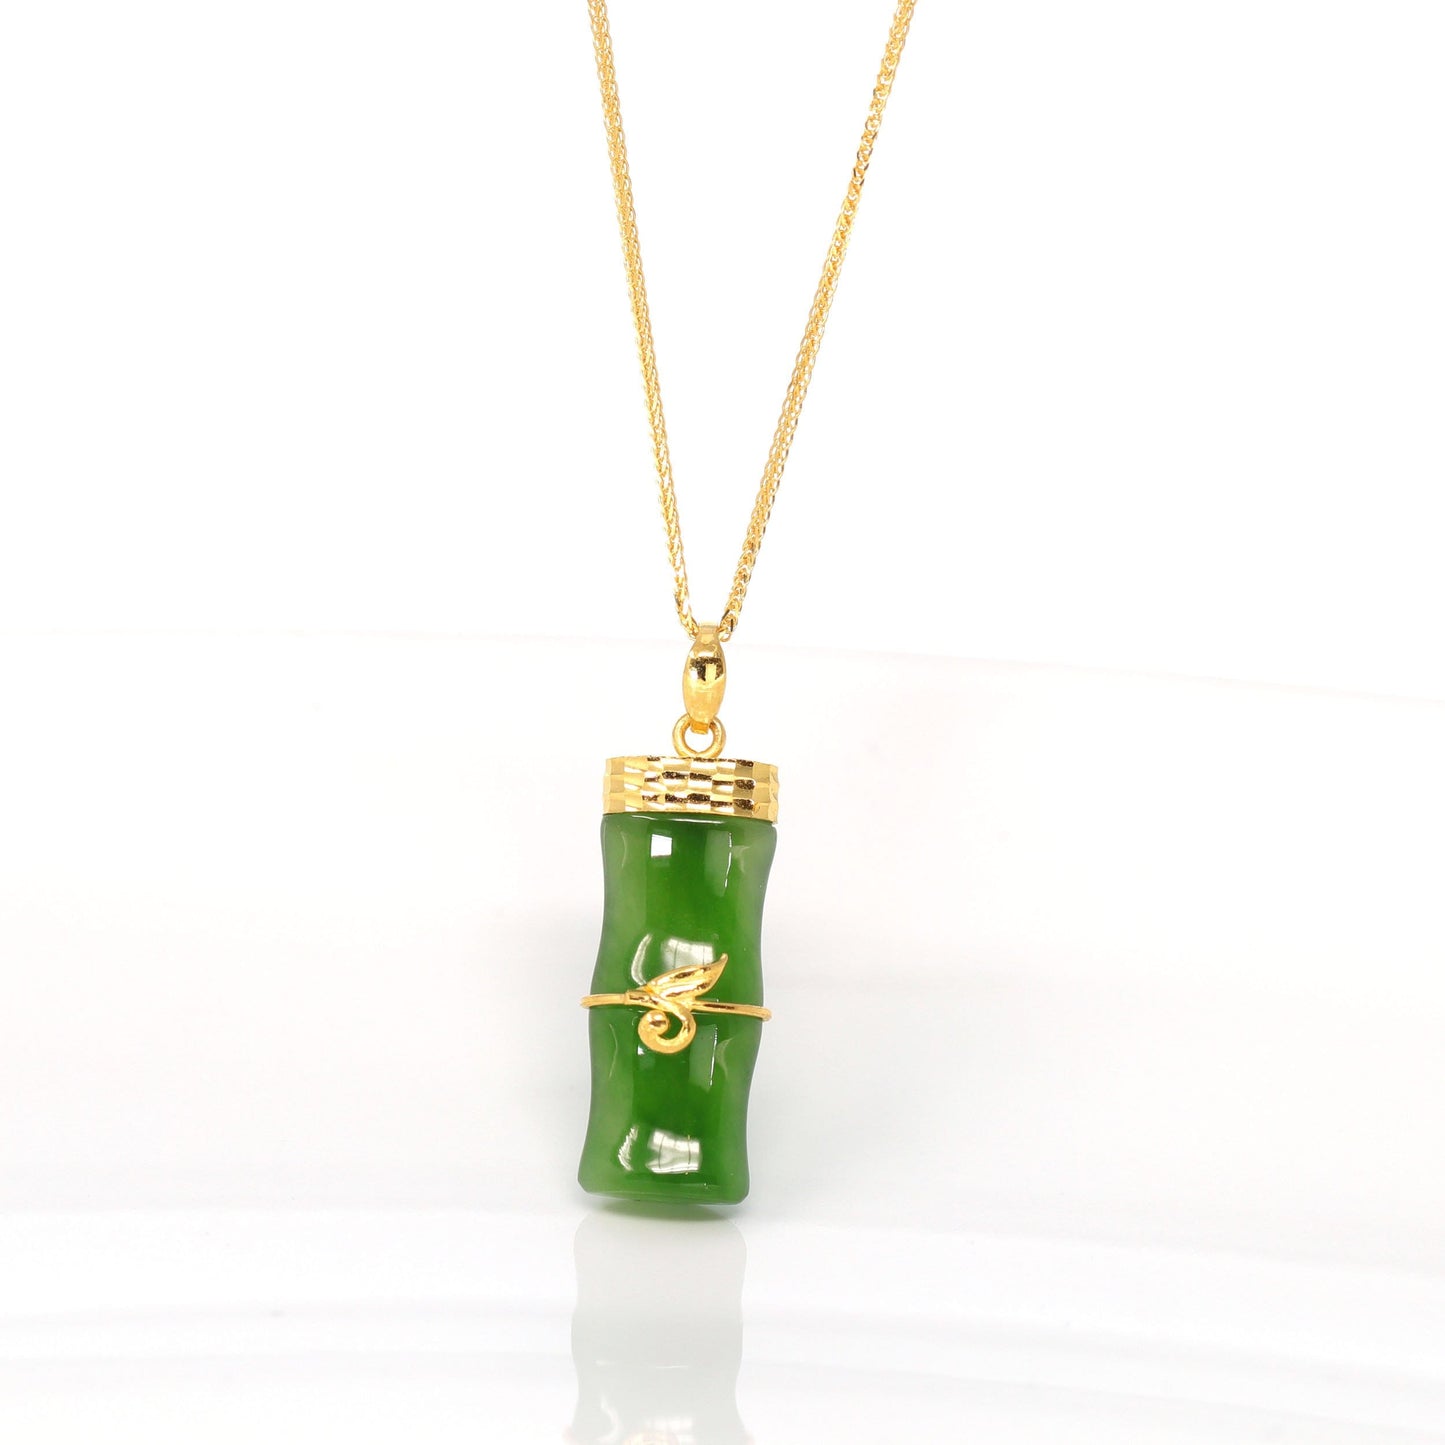  24k Yellow Gold Genuine Nephrite Green Jade Bamboo Pendant Necklace.